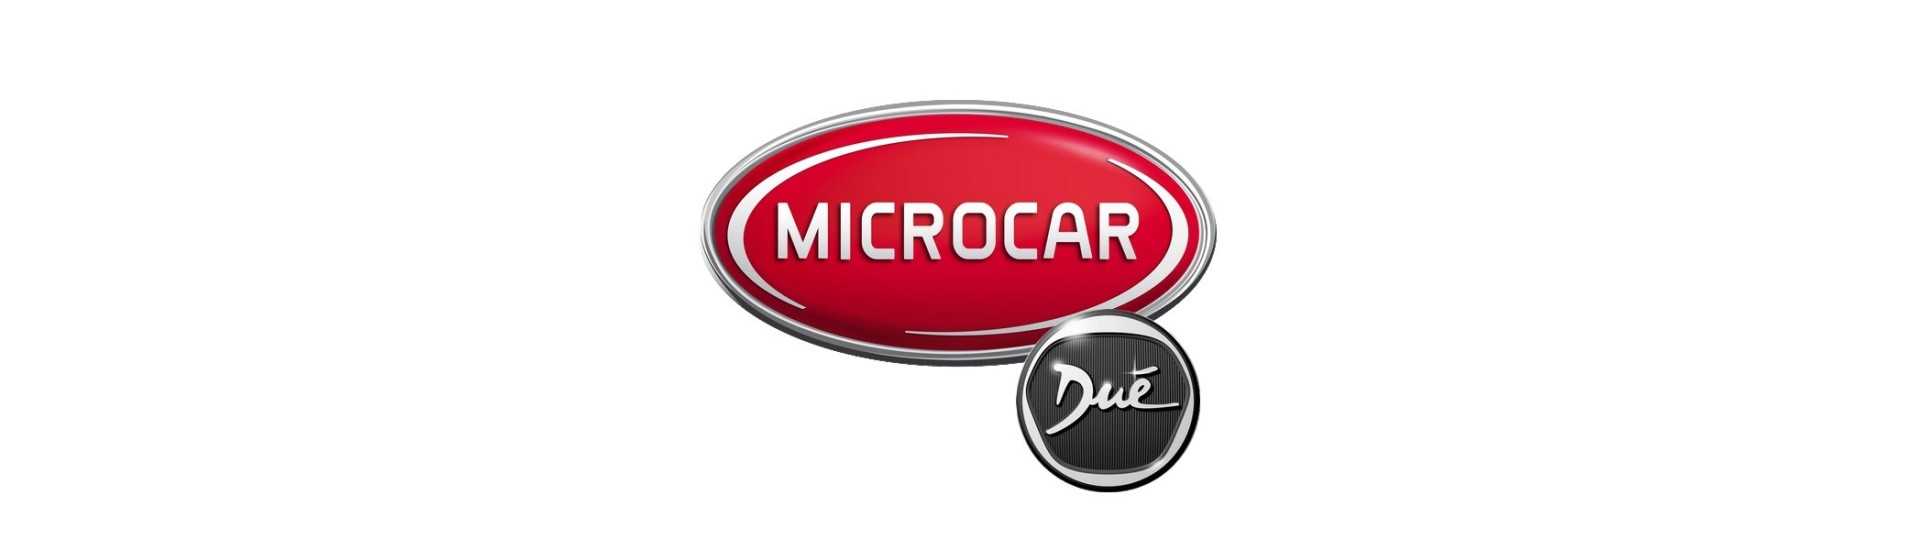 Kova jarrutus paras hinta ilman lupaa Microcar Dué